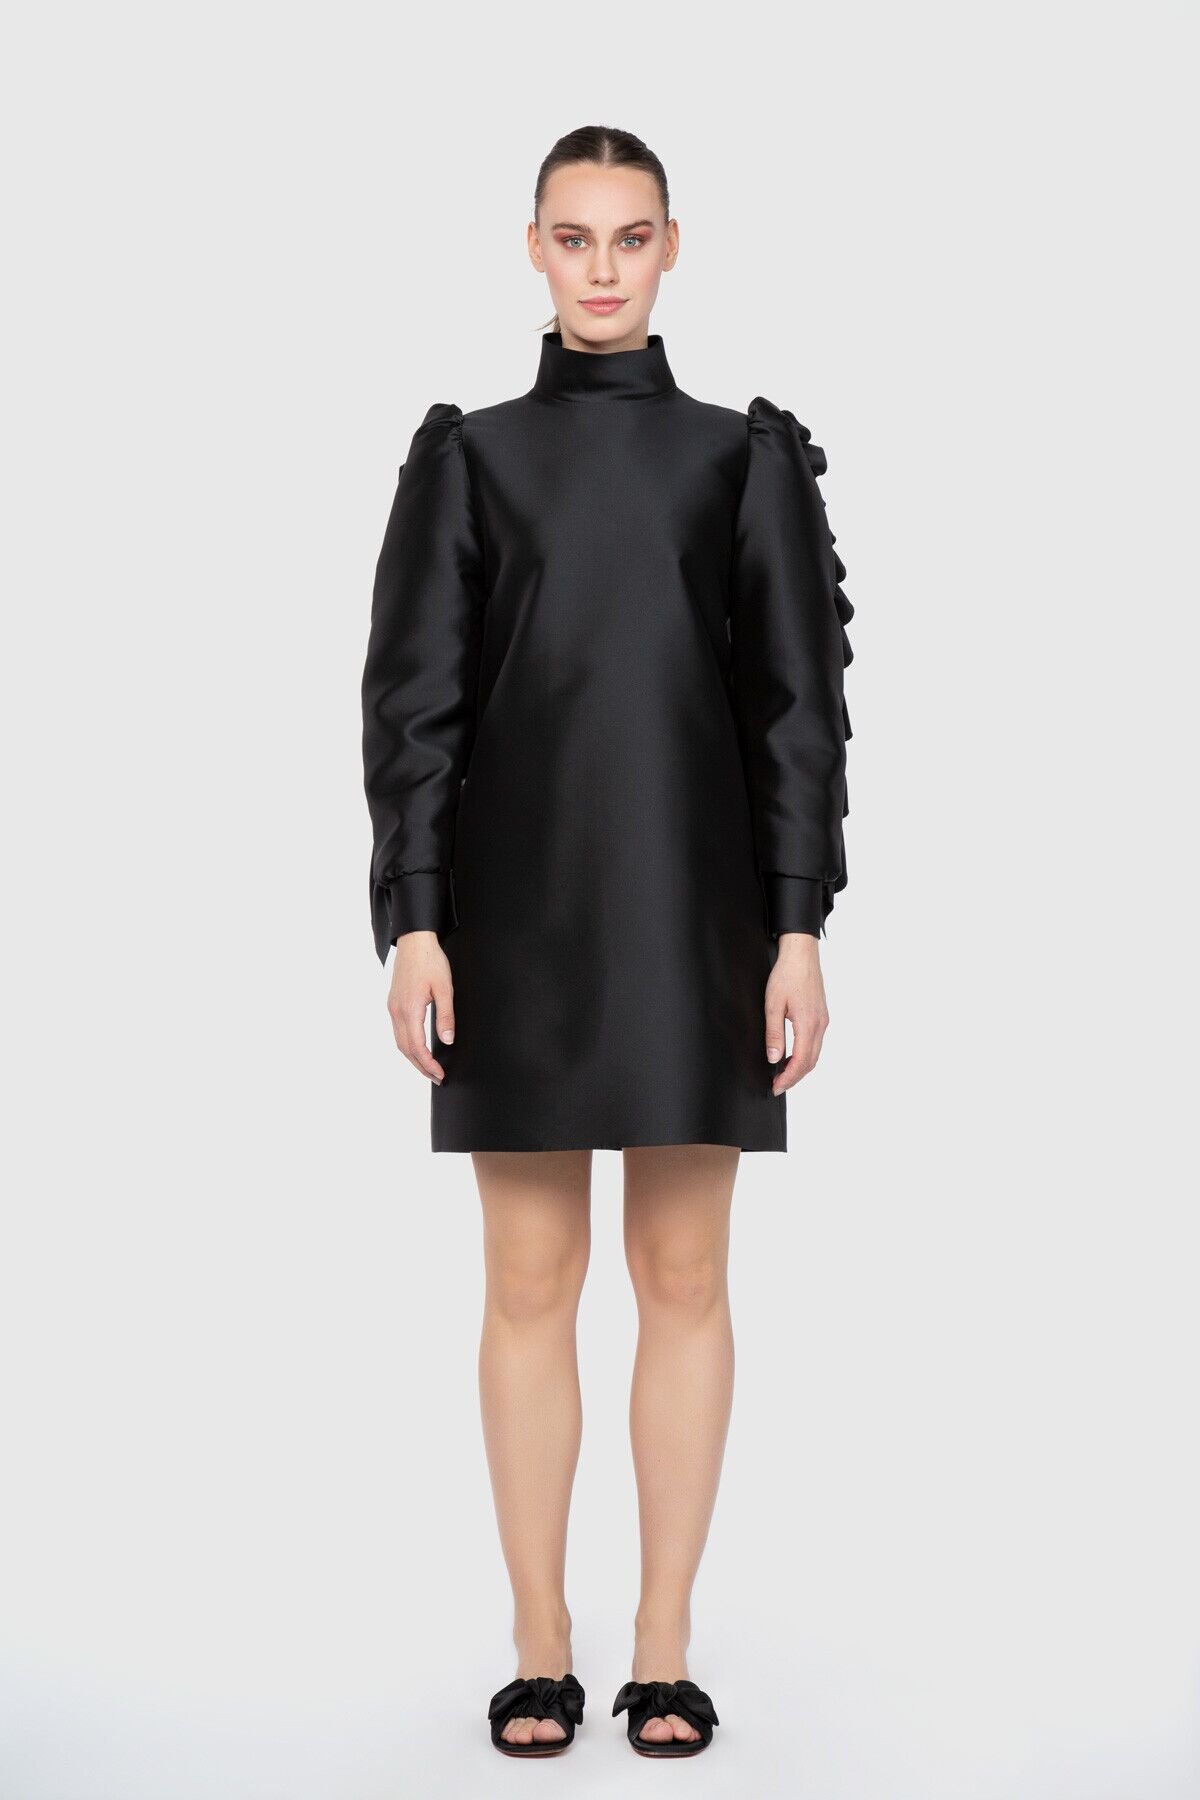 A Form Standing Collar Mini Black Dress